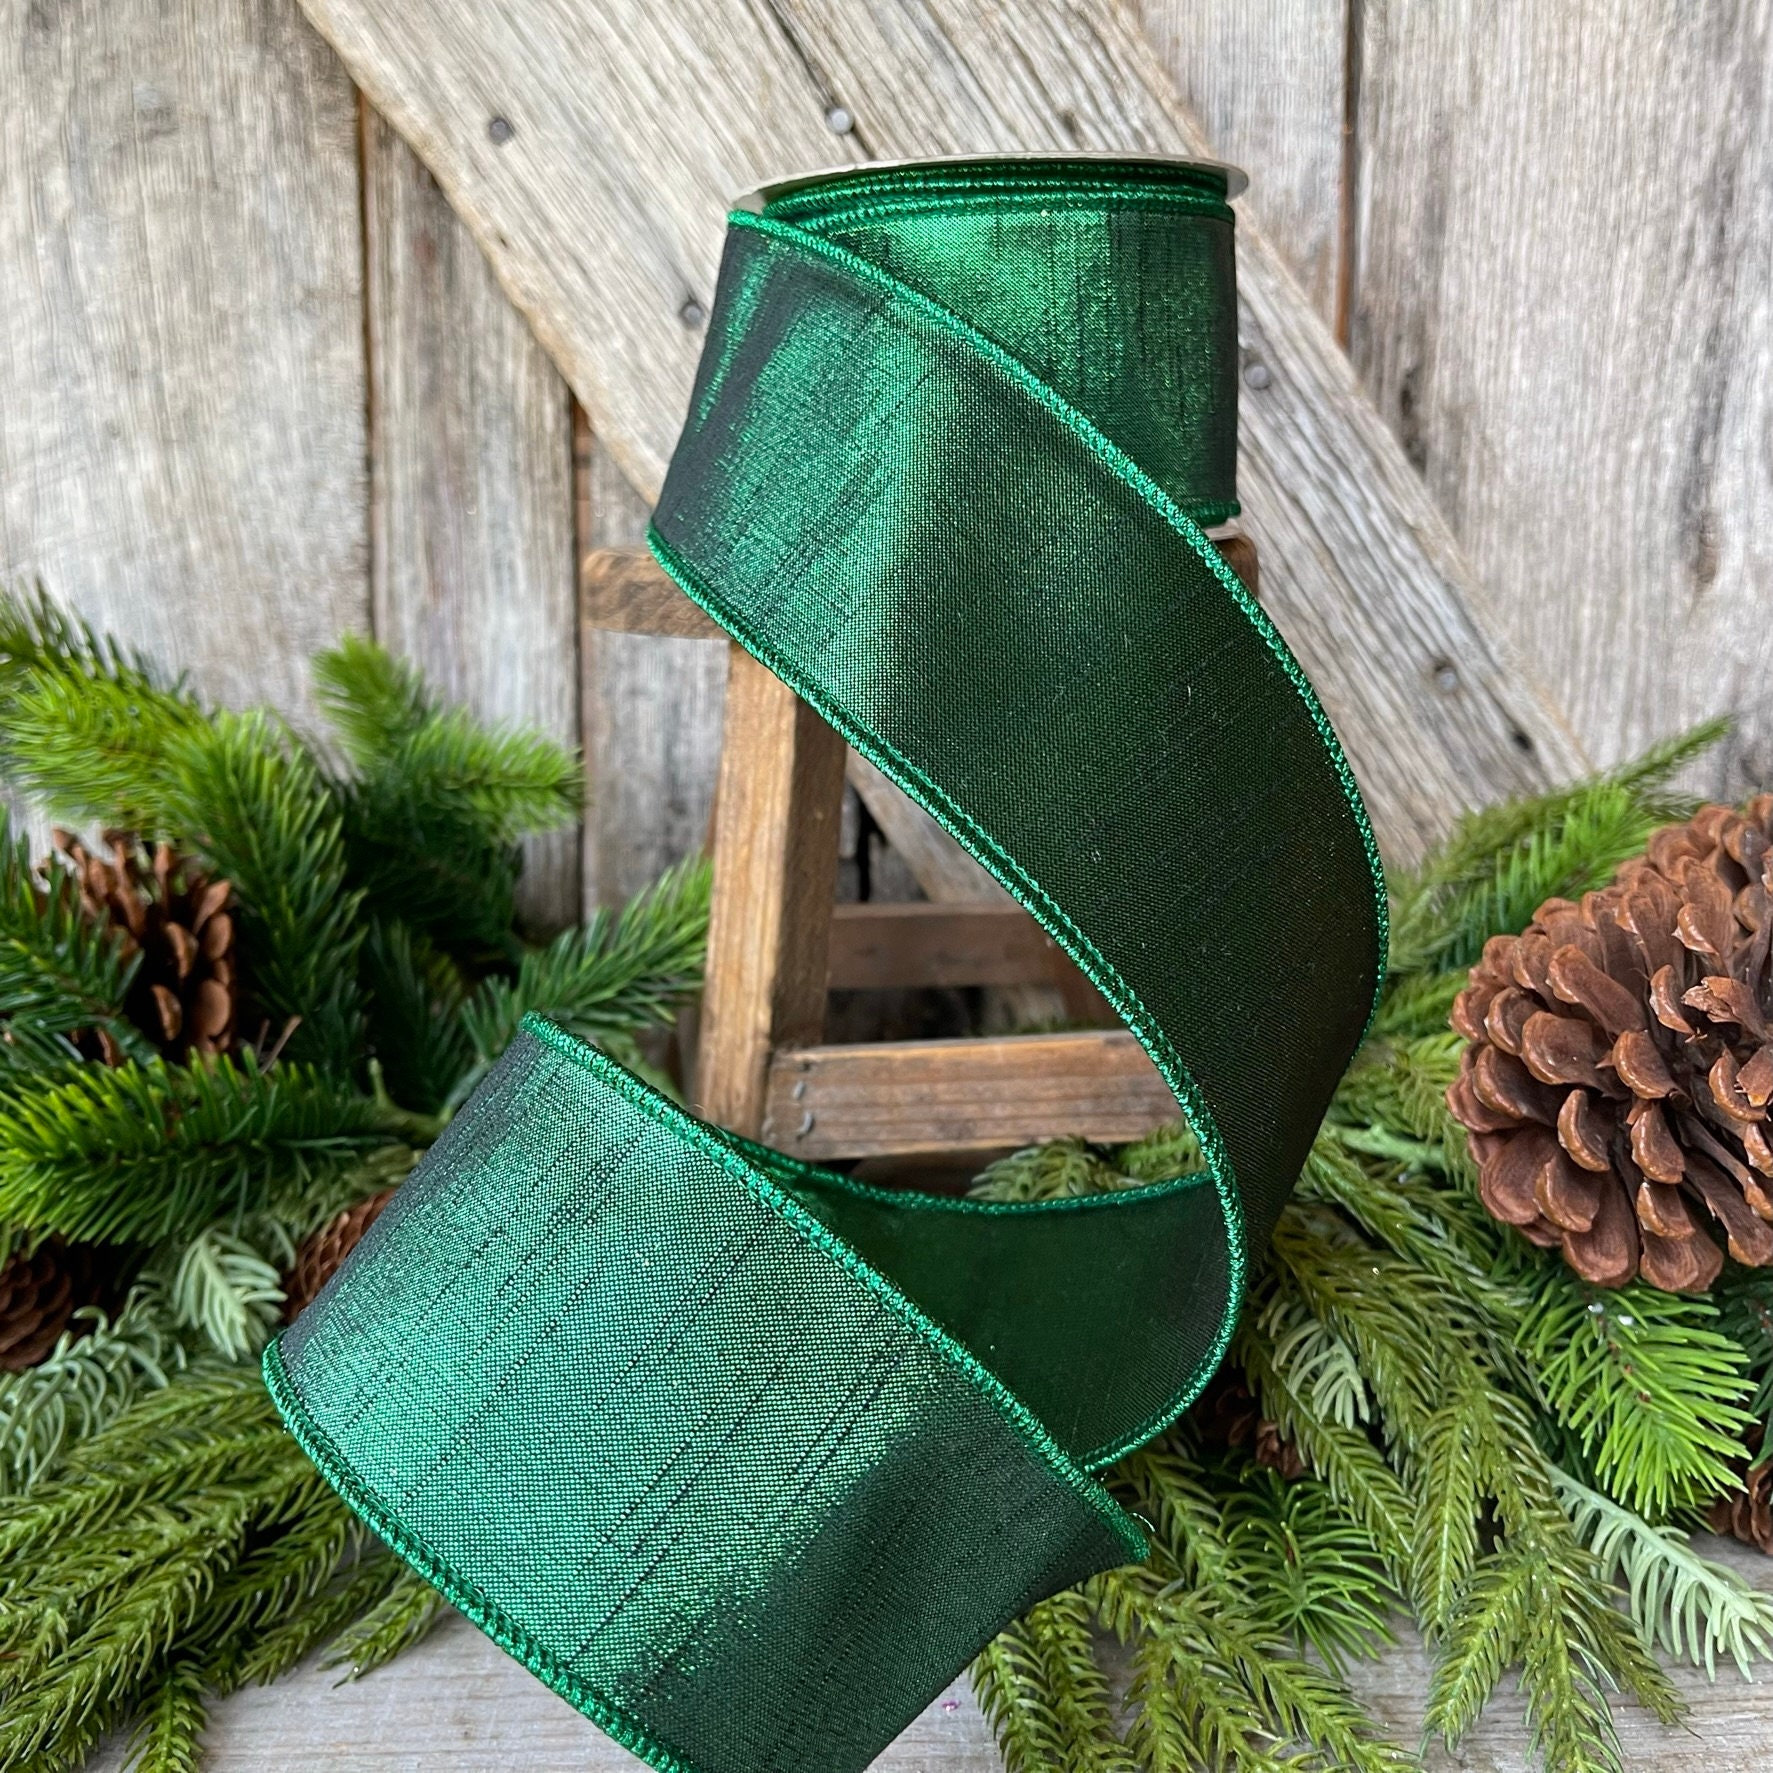 Emerald green 1.5 inch Farrisilk Christmas ribbon - 10 yards, wired